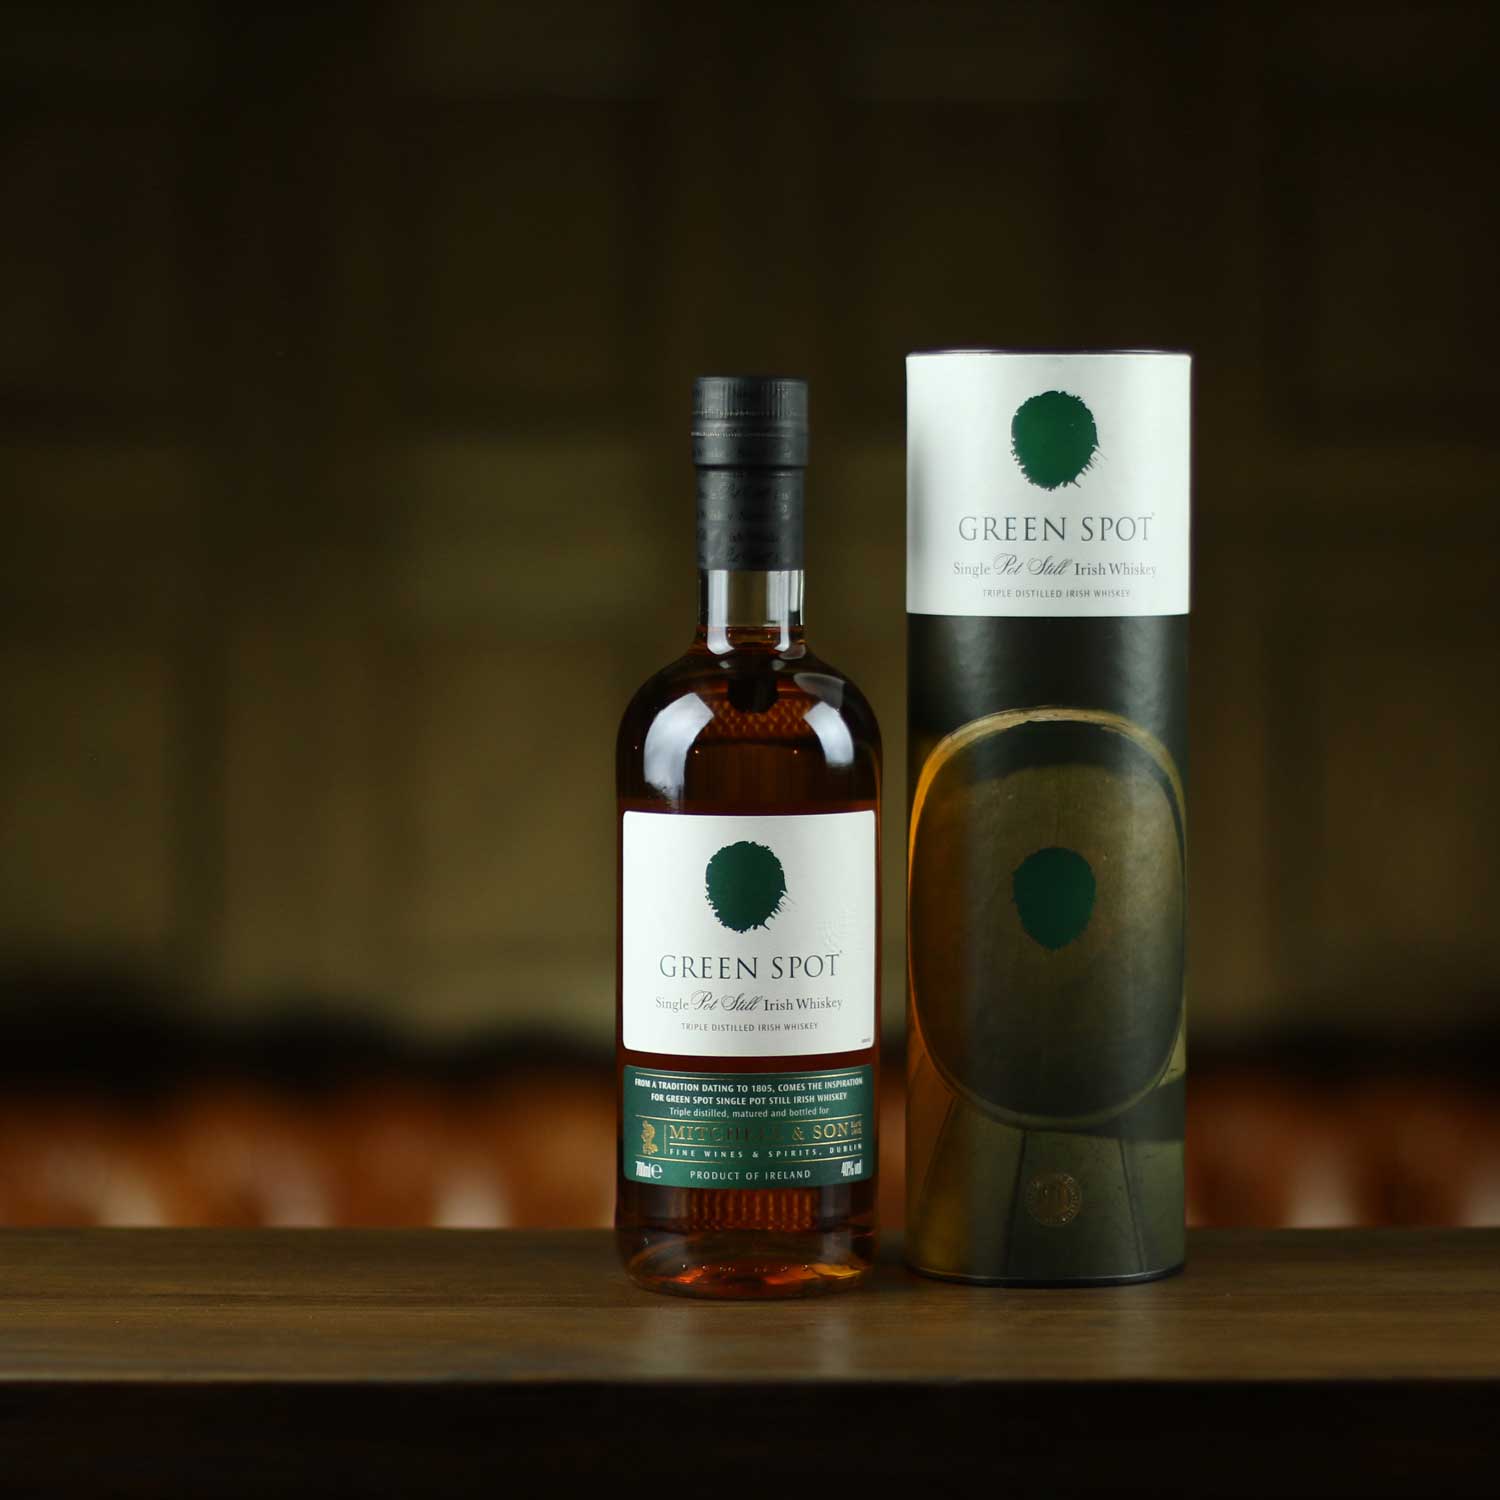 Product Detail  Green Spot Single Pot Still Triple Distilled Irish Whiskey